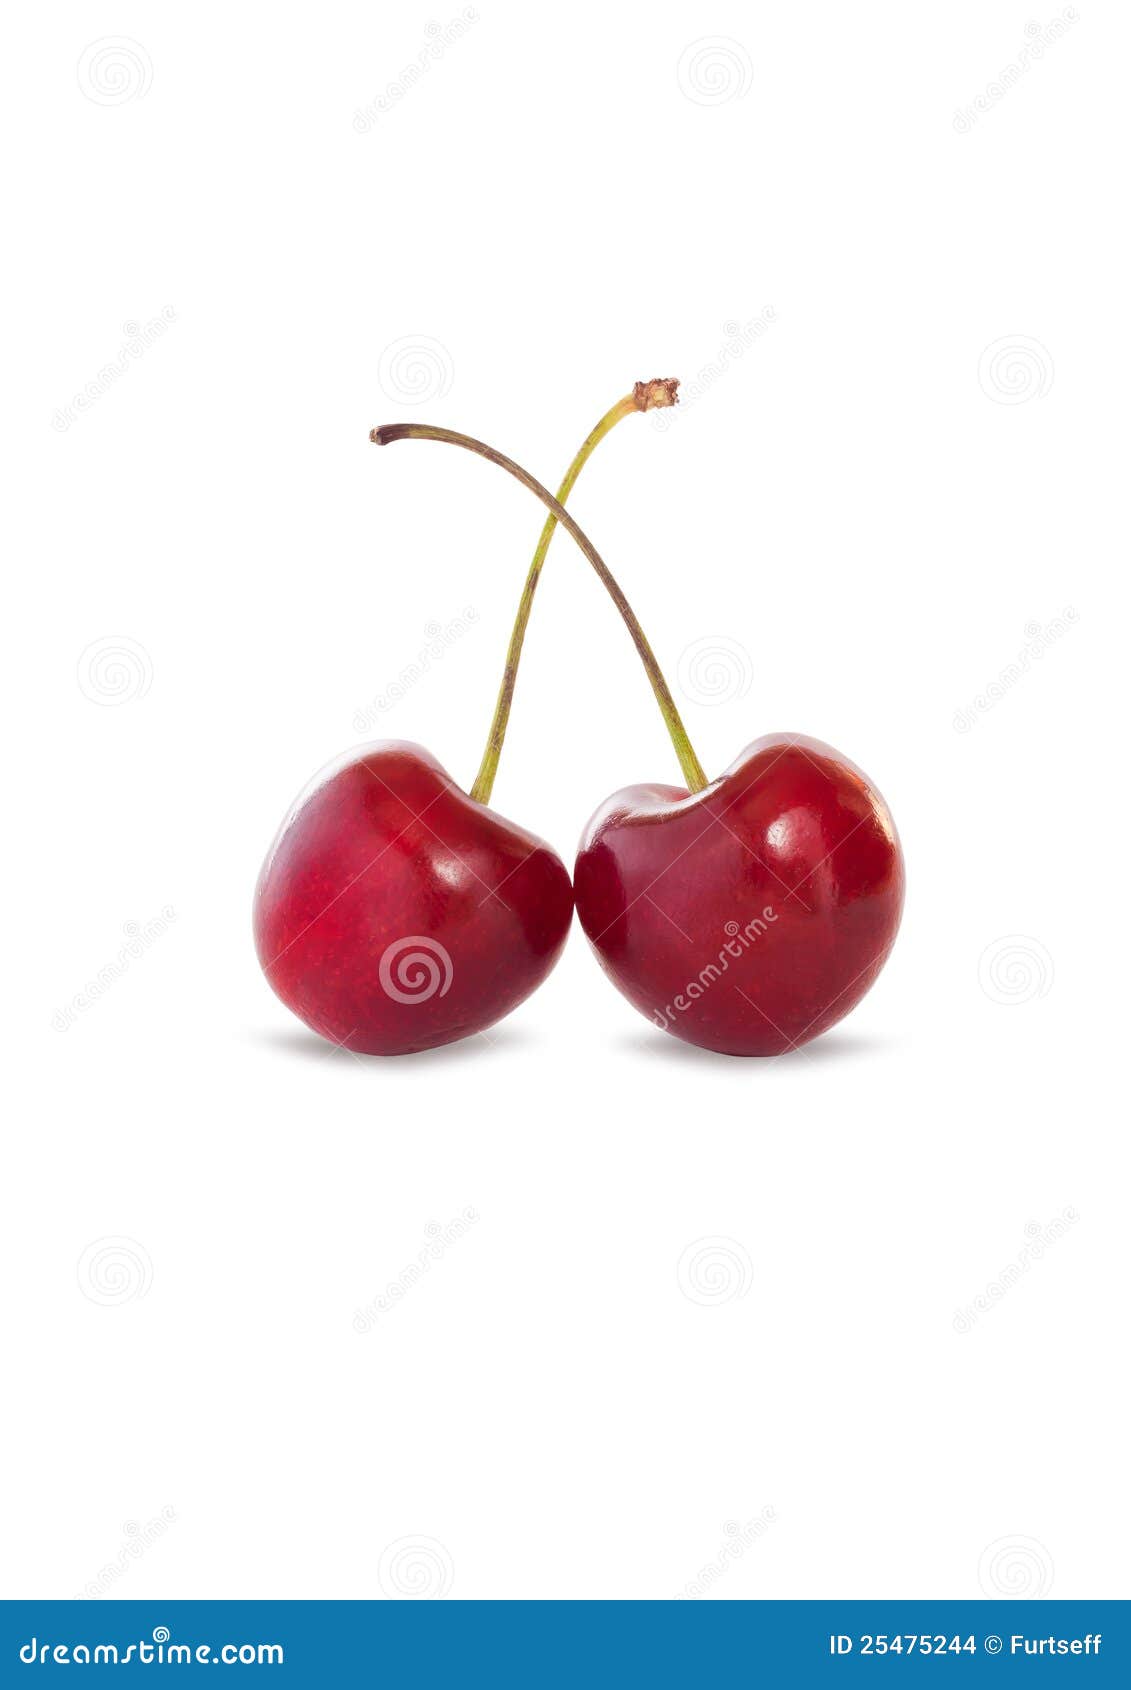 Fruits of cherry stock photo. Image of juicy, ingredient - 25475244